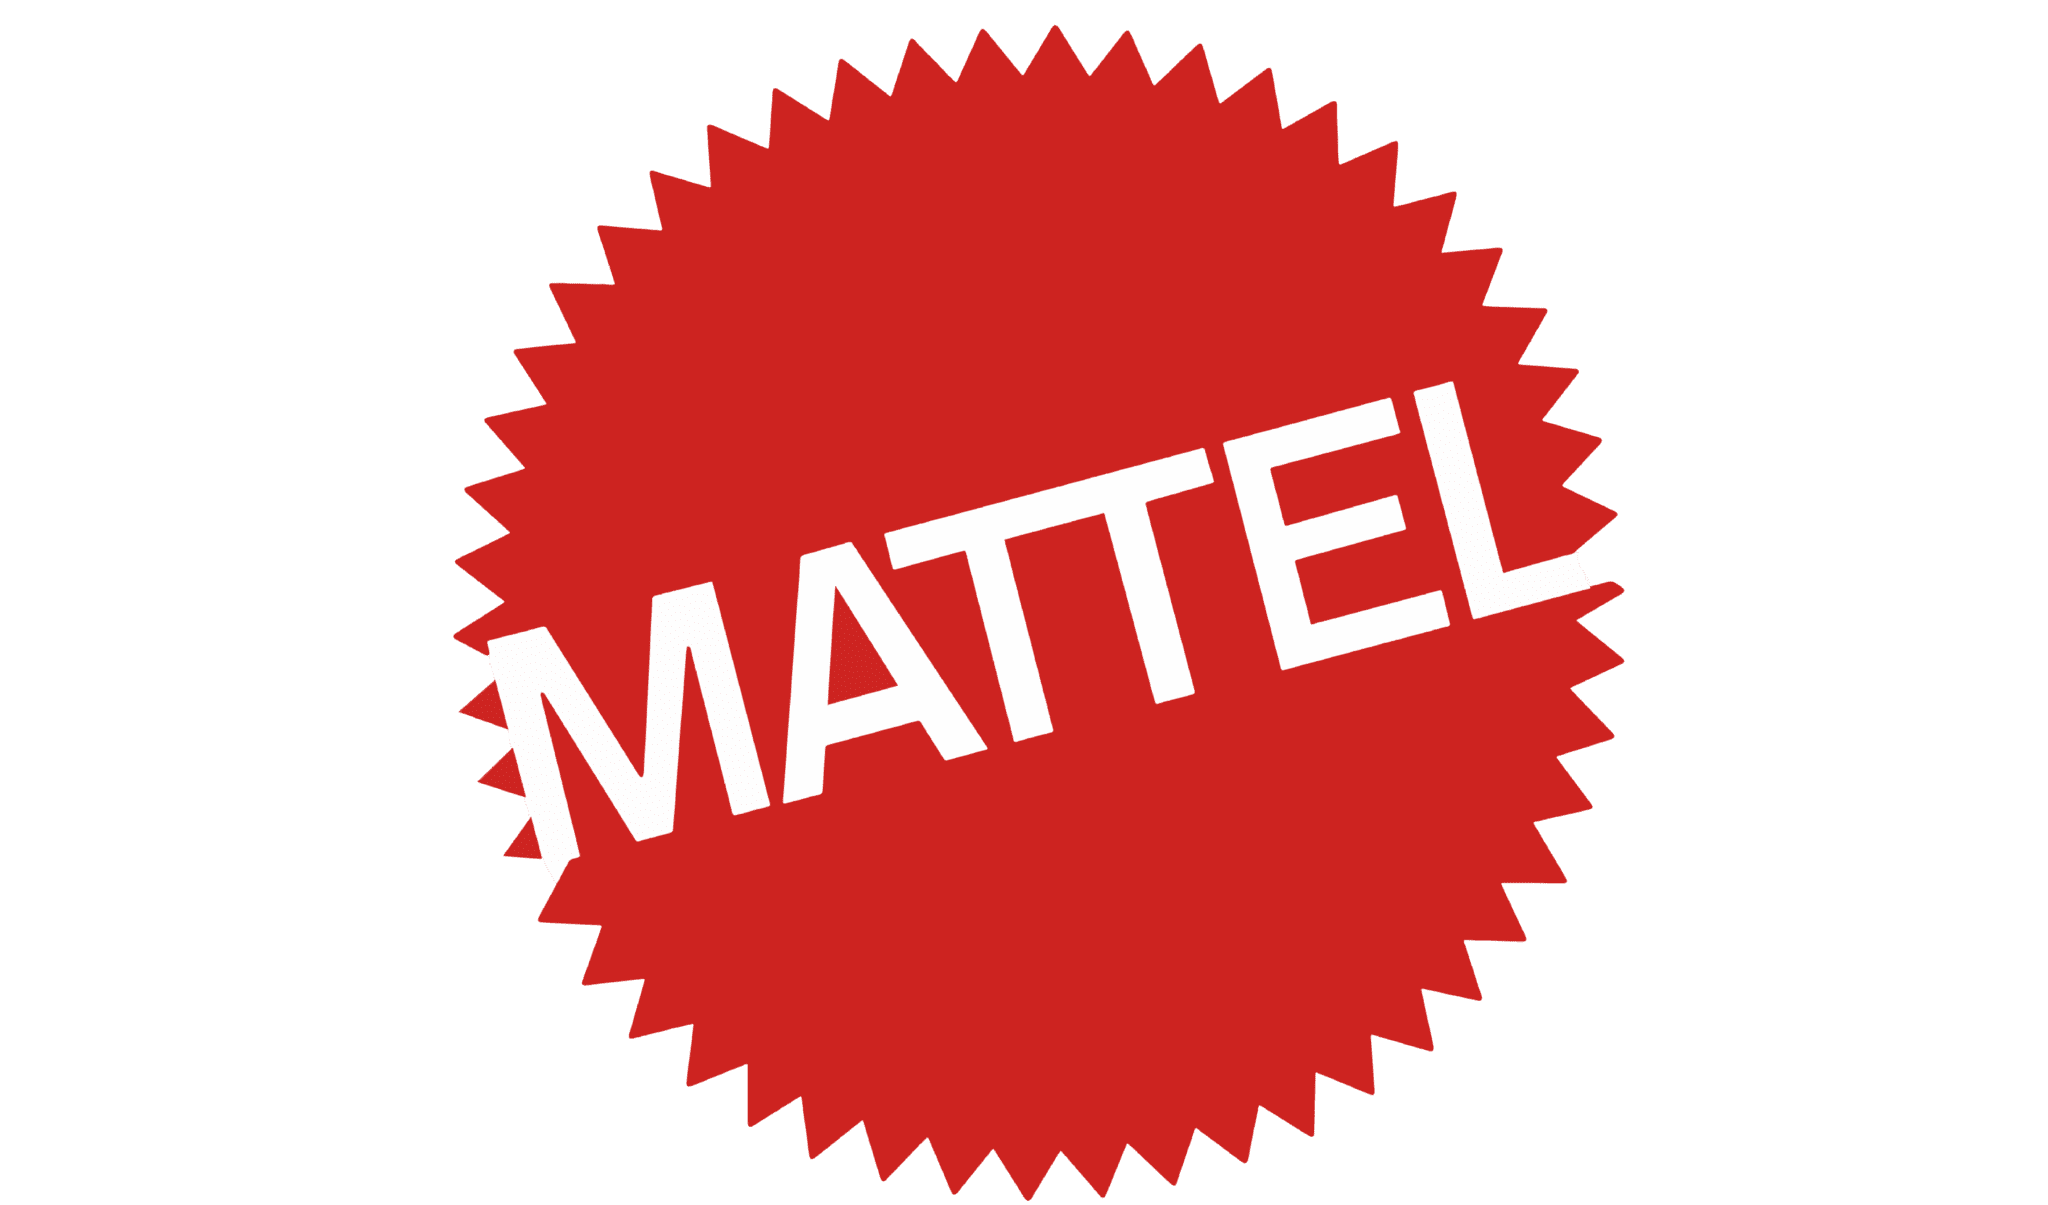 The mattel logo